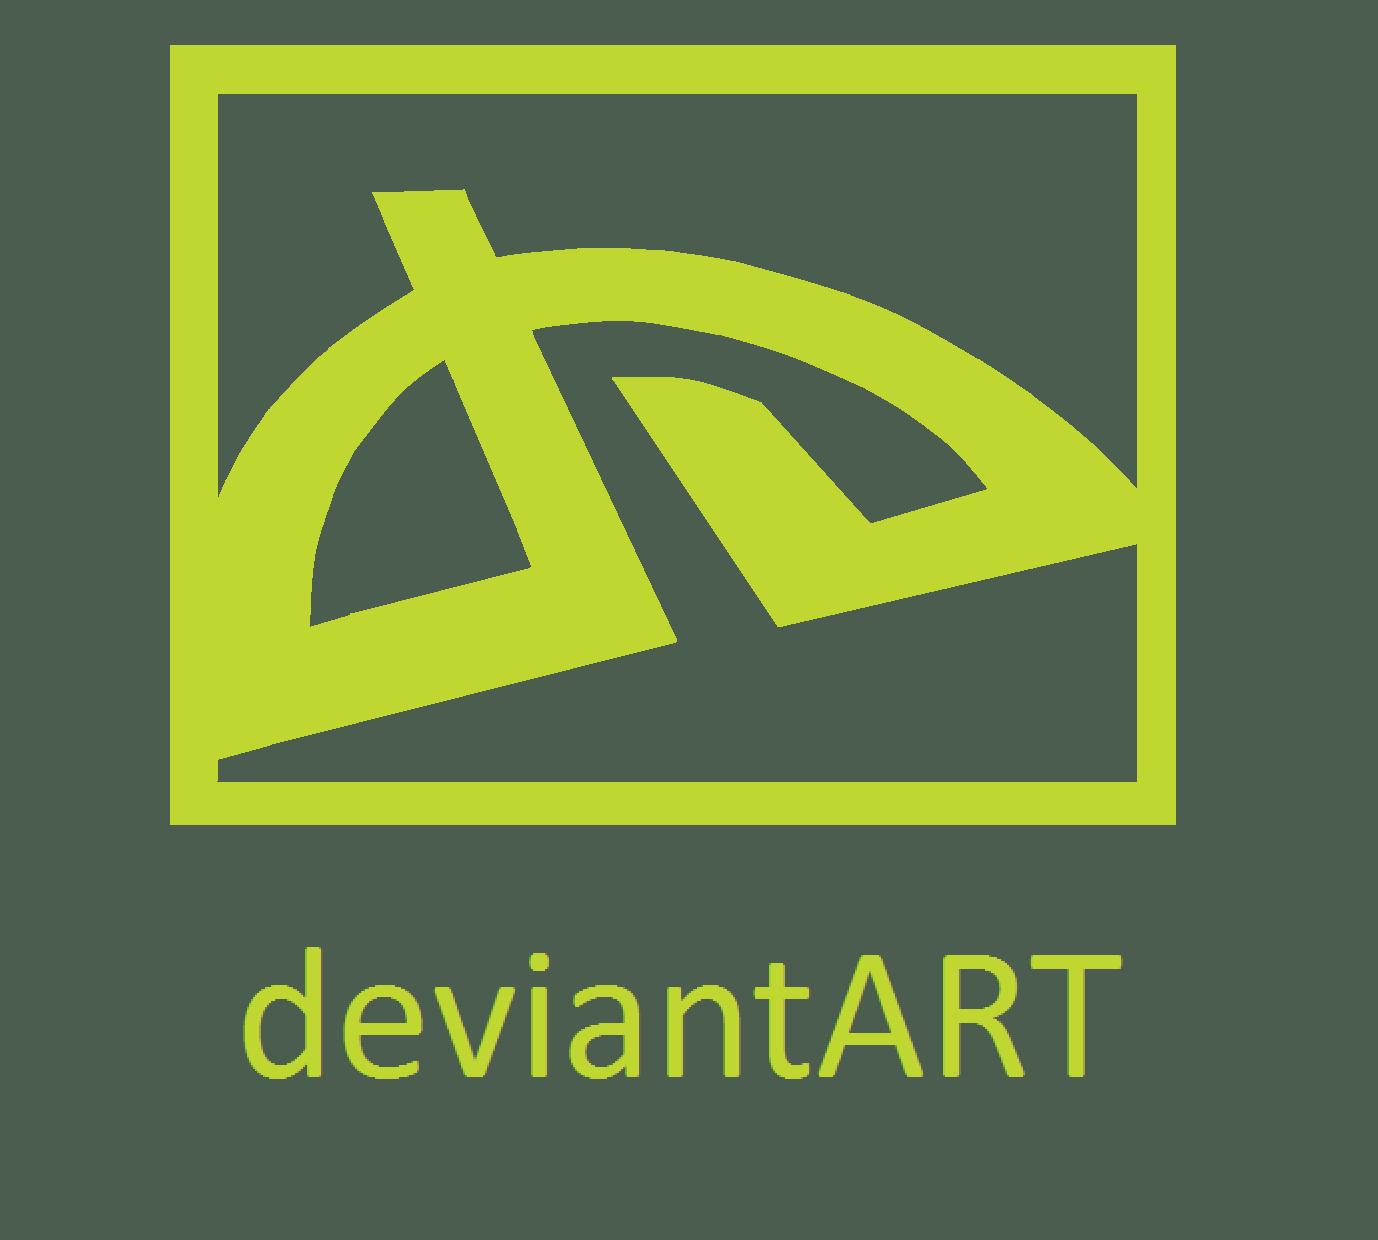 deviantart-logo-png.jpg